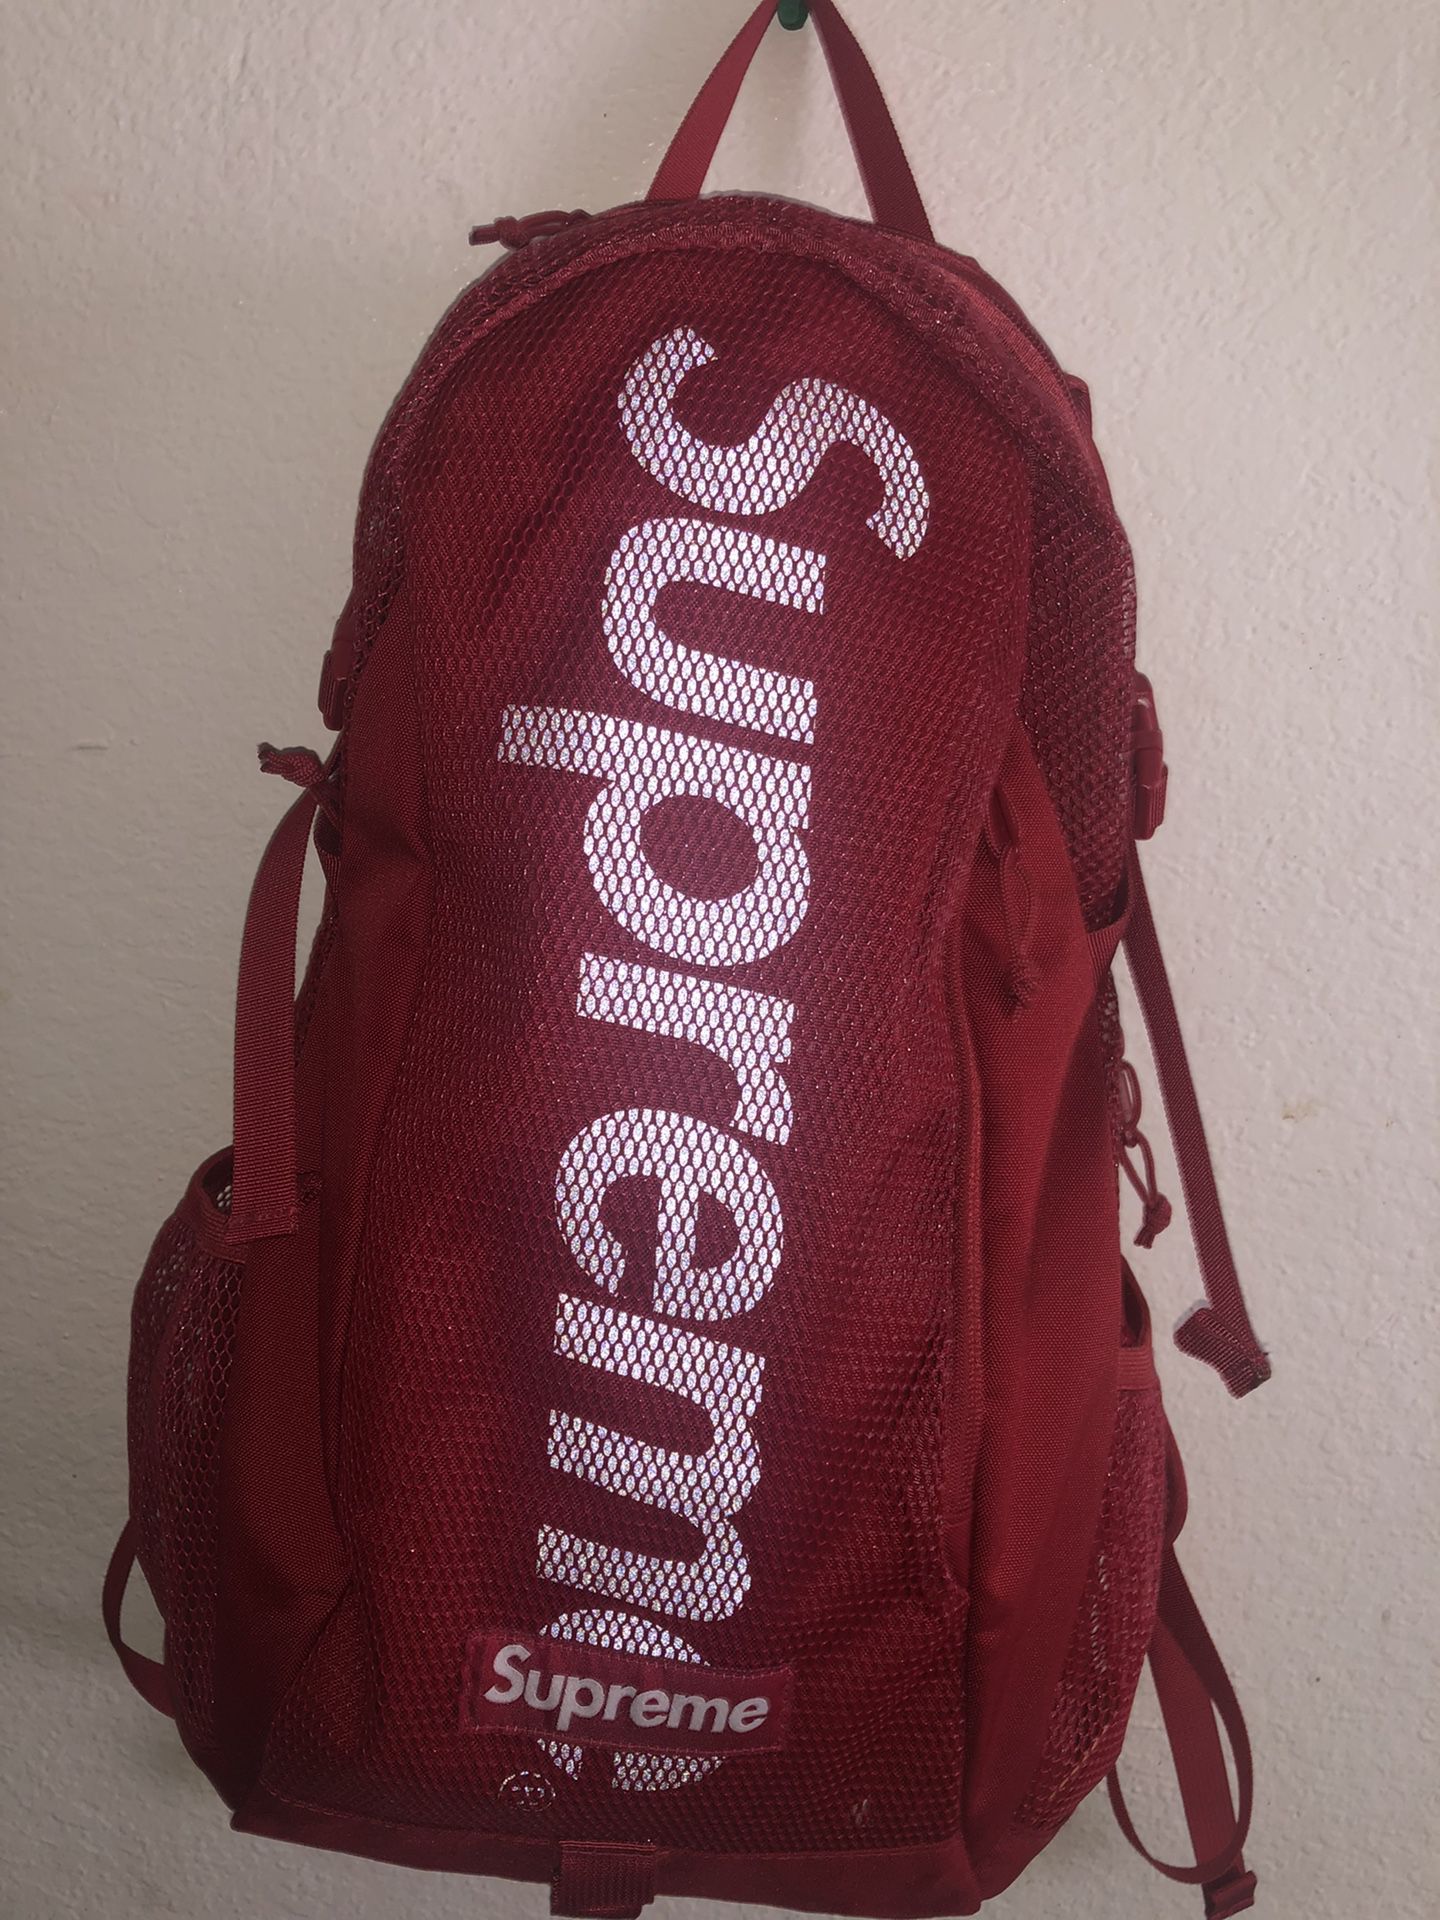 Supreme backpack 